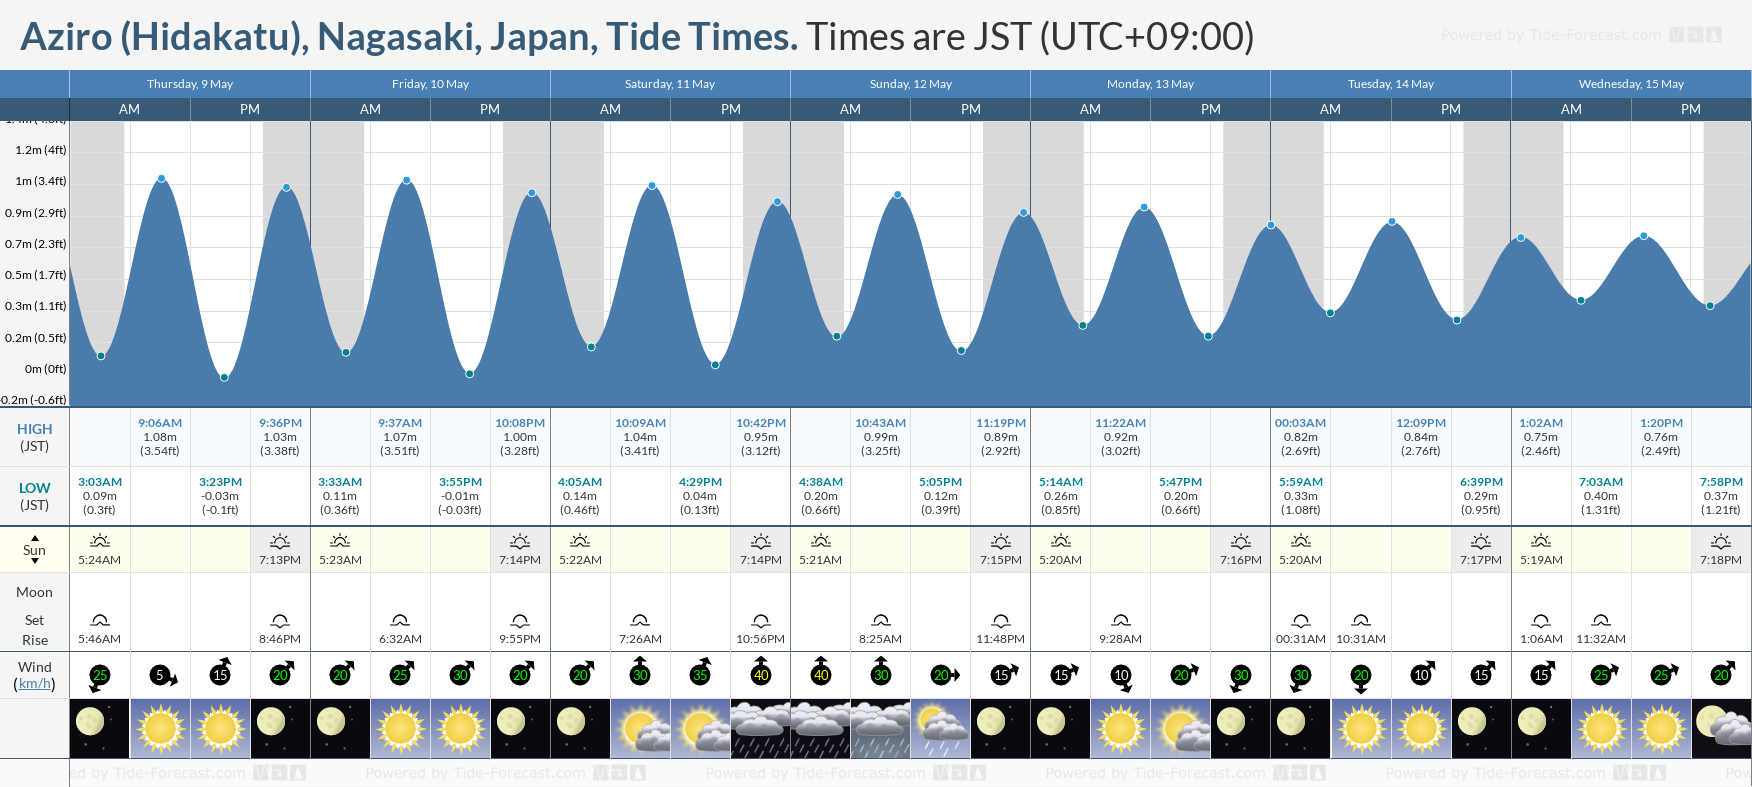 Aziro (Hidakatu), Nagasaki, Japan Tide Chart including high and low tide times for the next 7 days